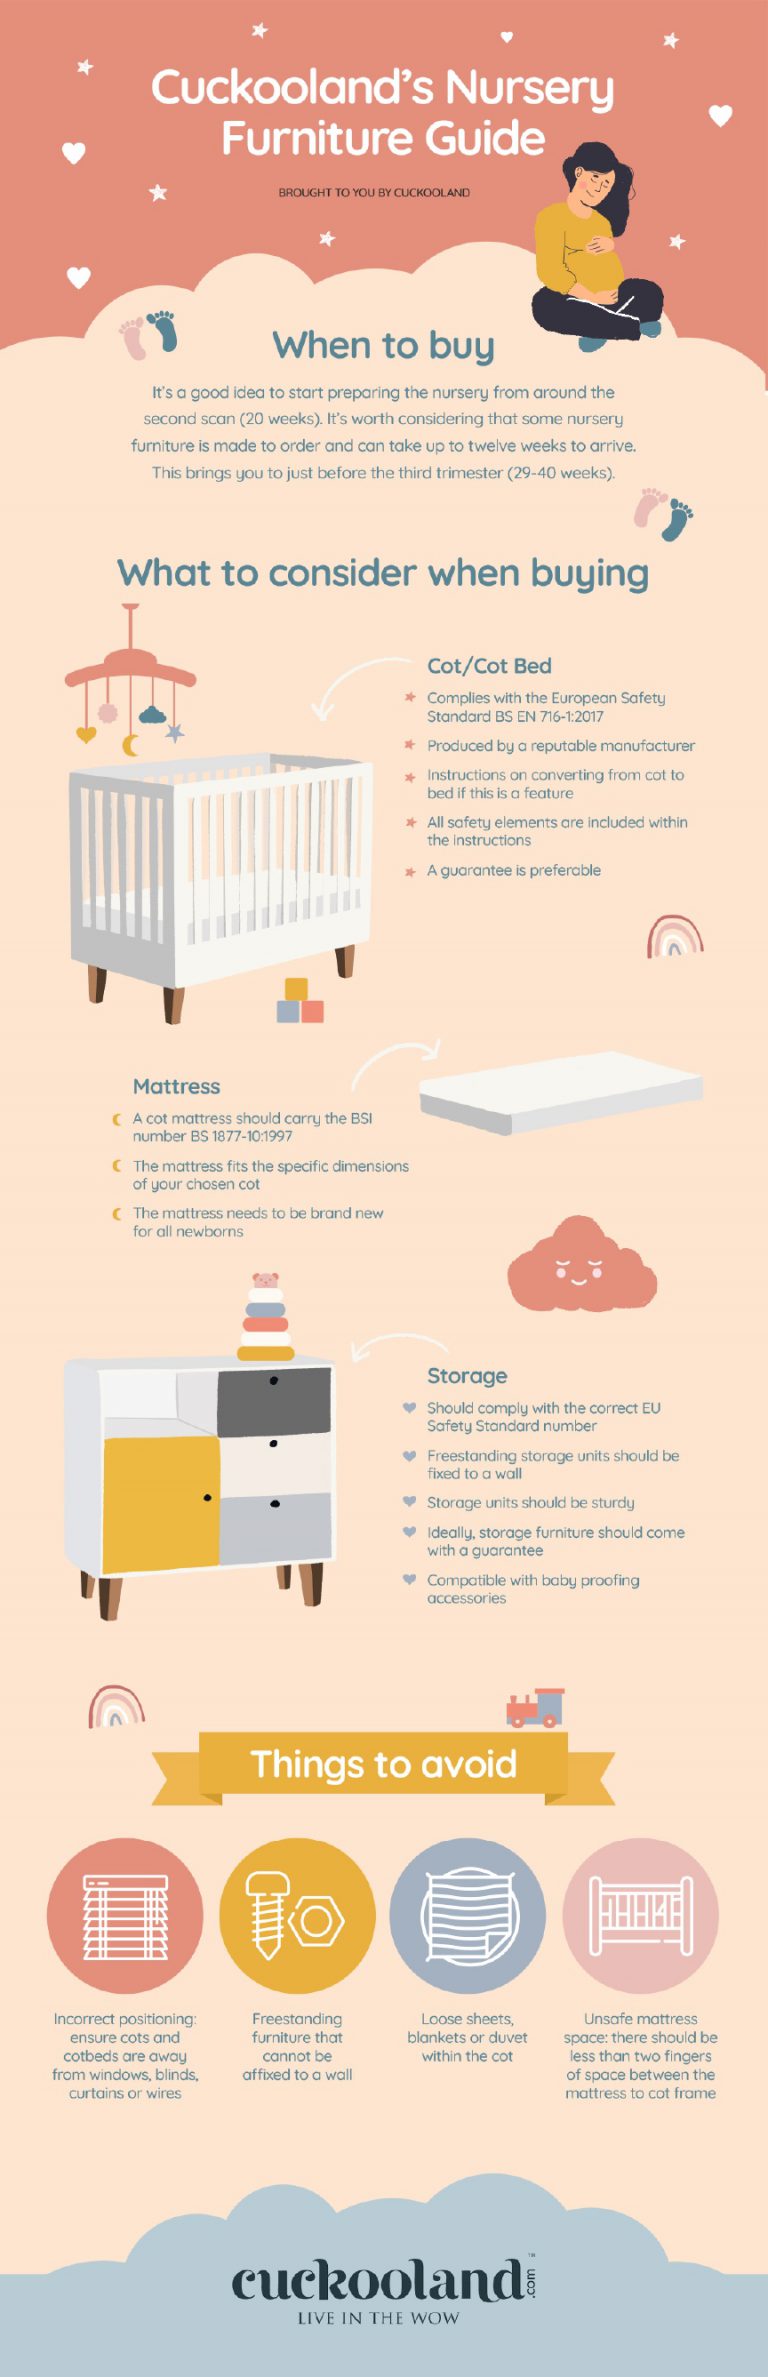 Cuckooland’s Nursery Furniture Guide Infographic